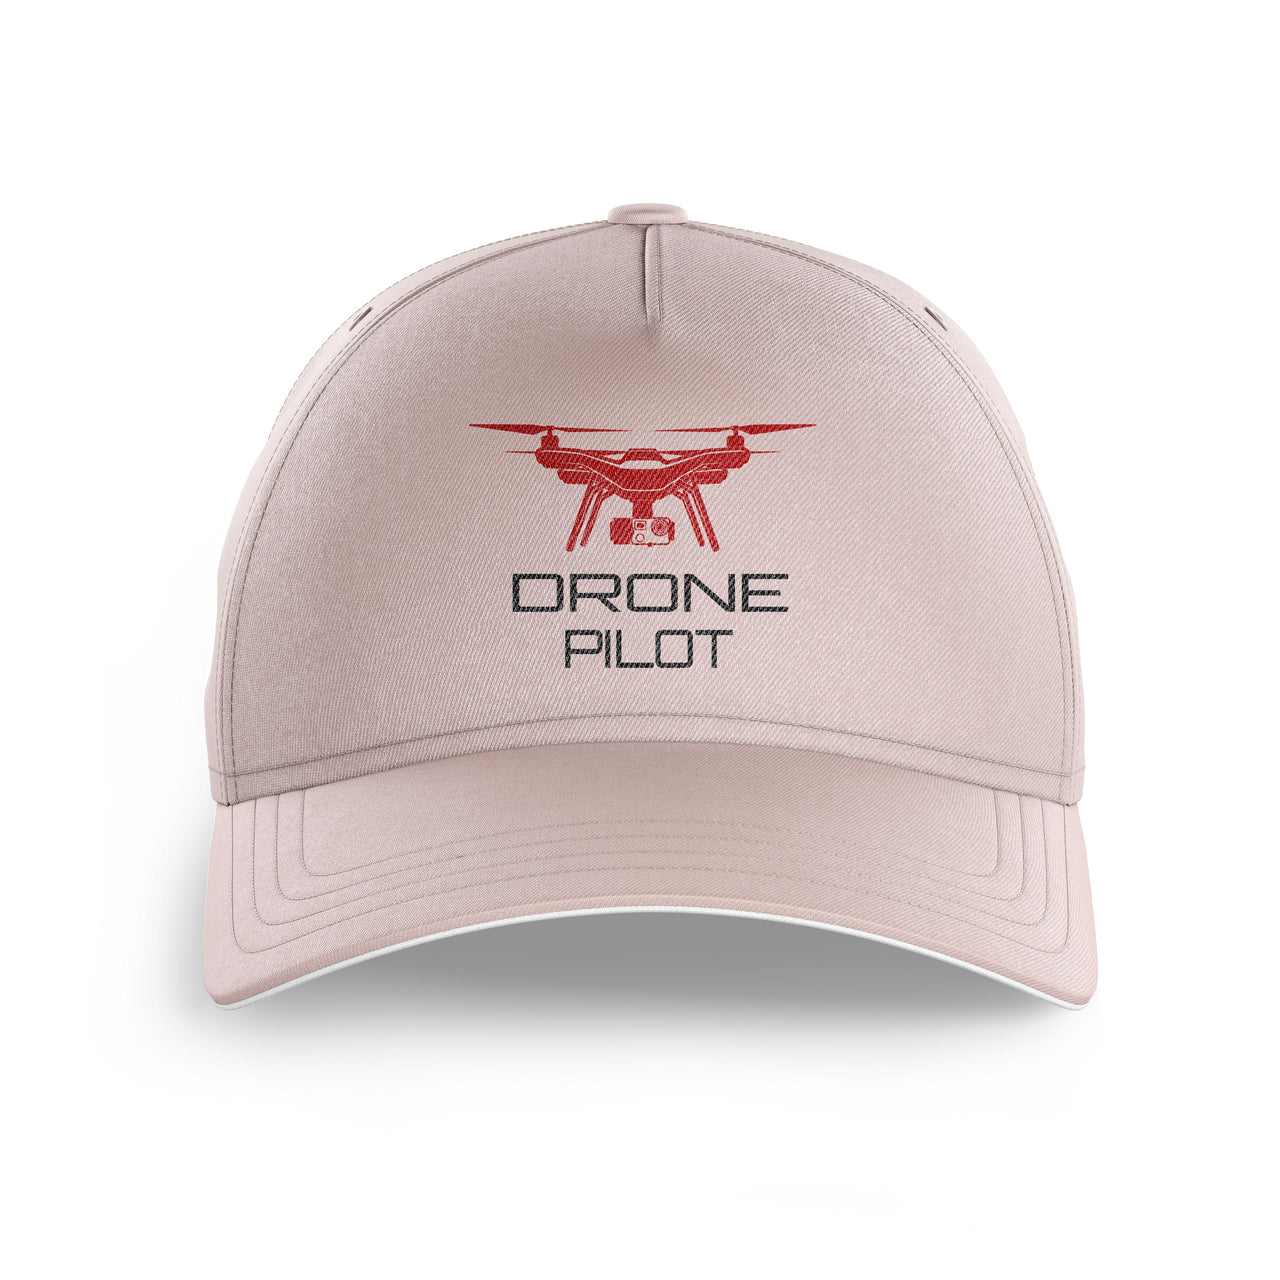 Drone Pilot Printed Hats